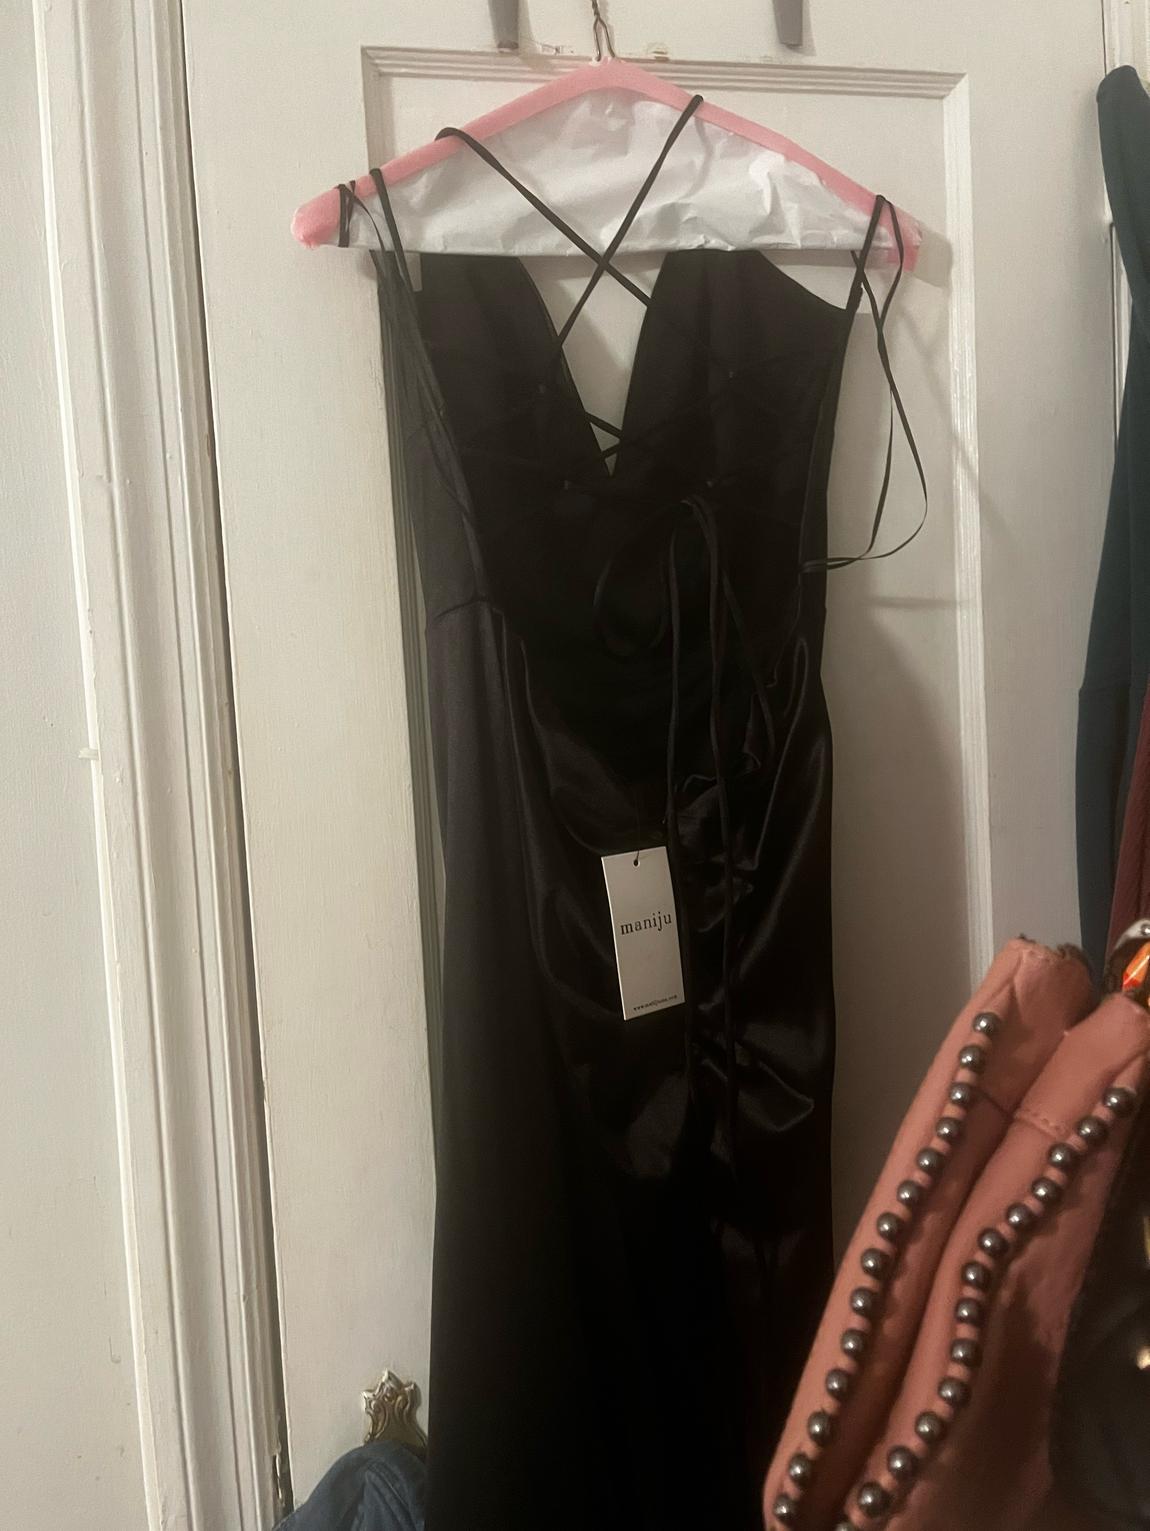 Size 10 Black Mermaid Dress on Queenly